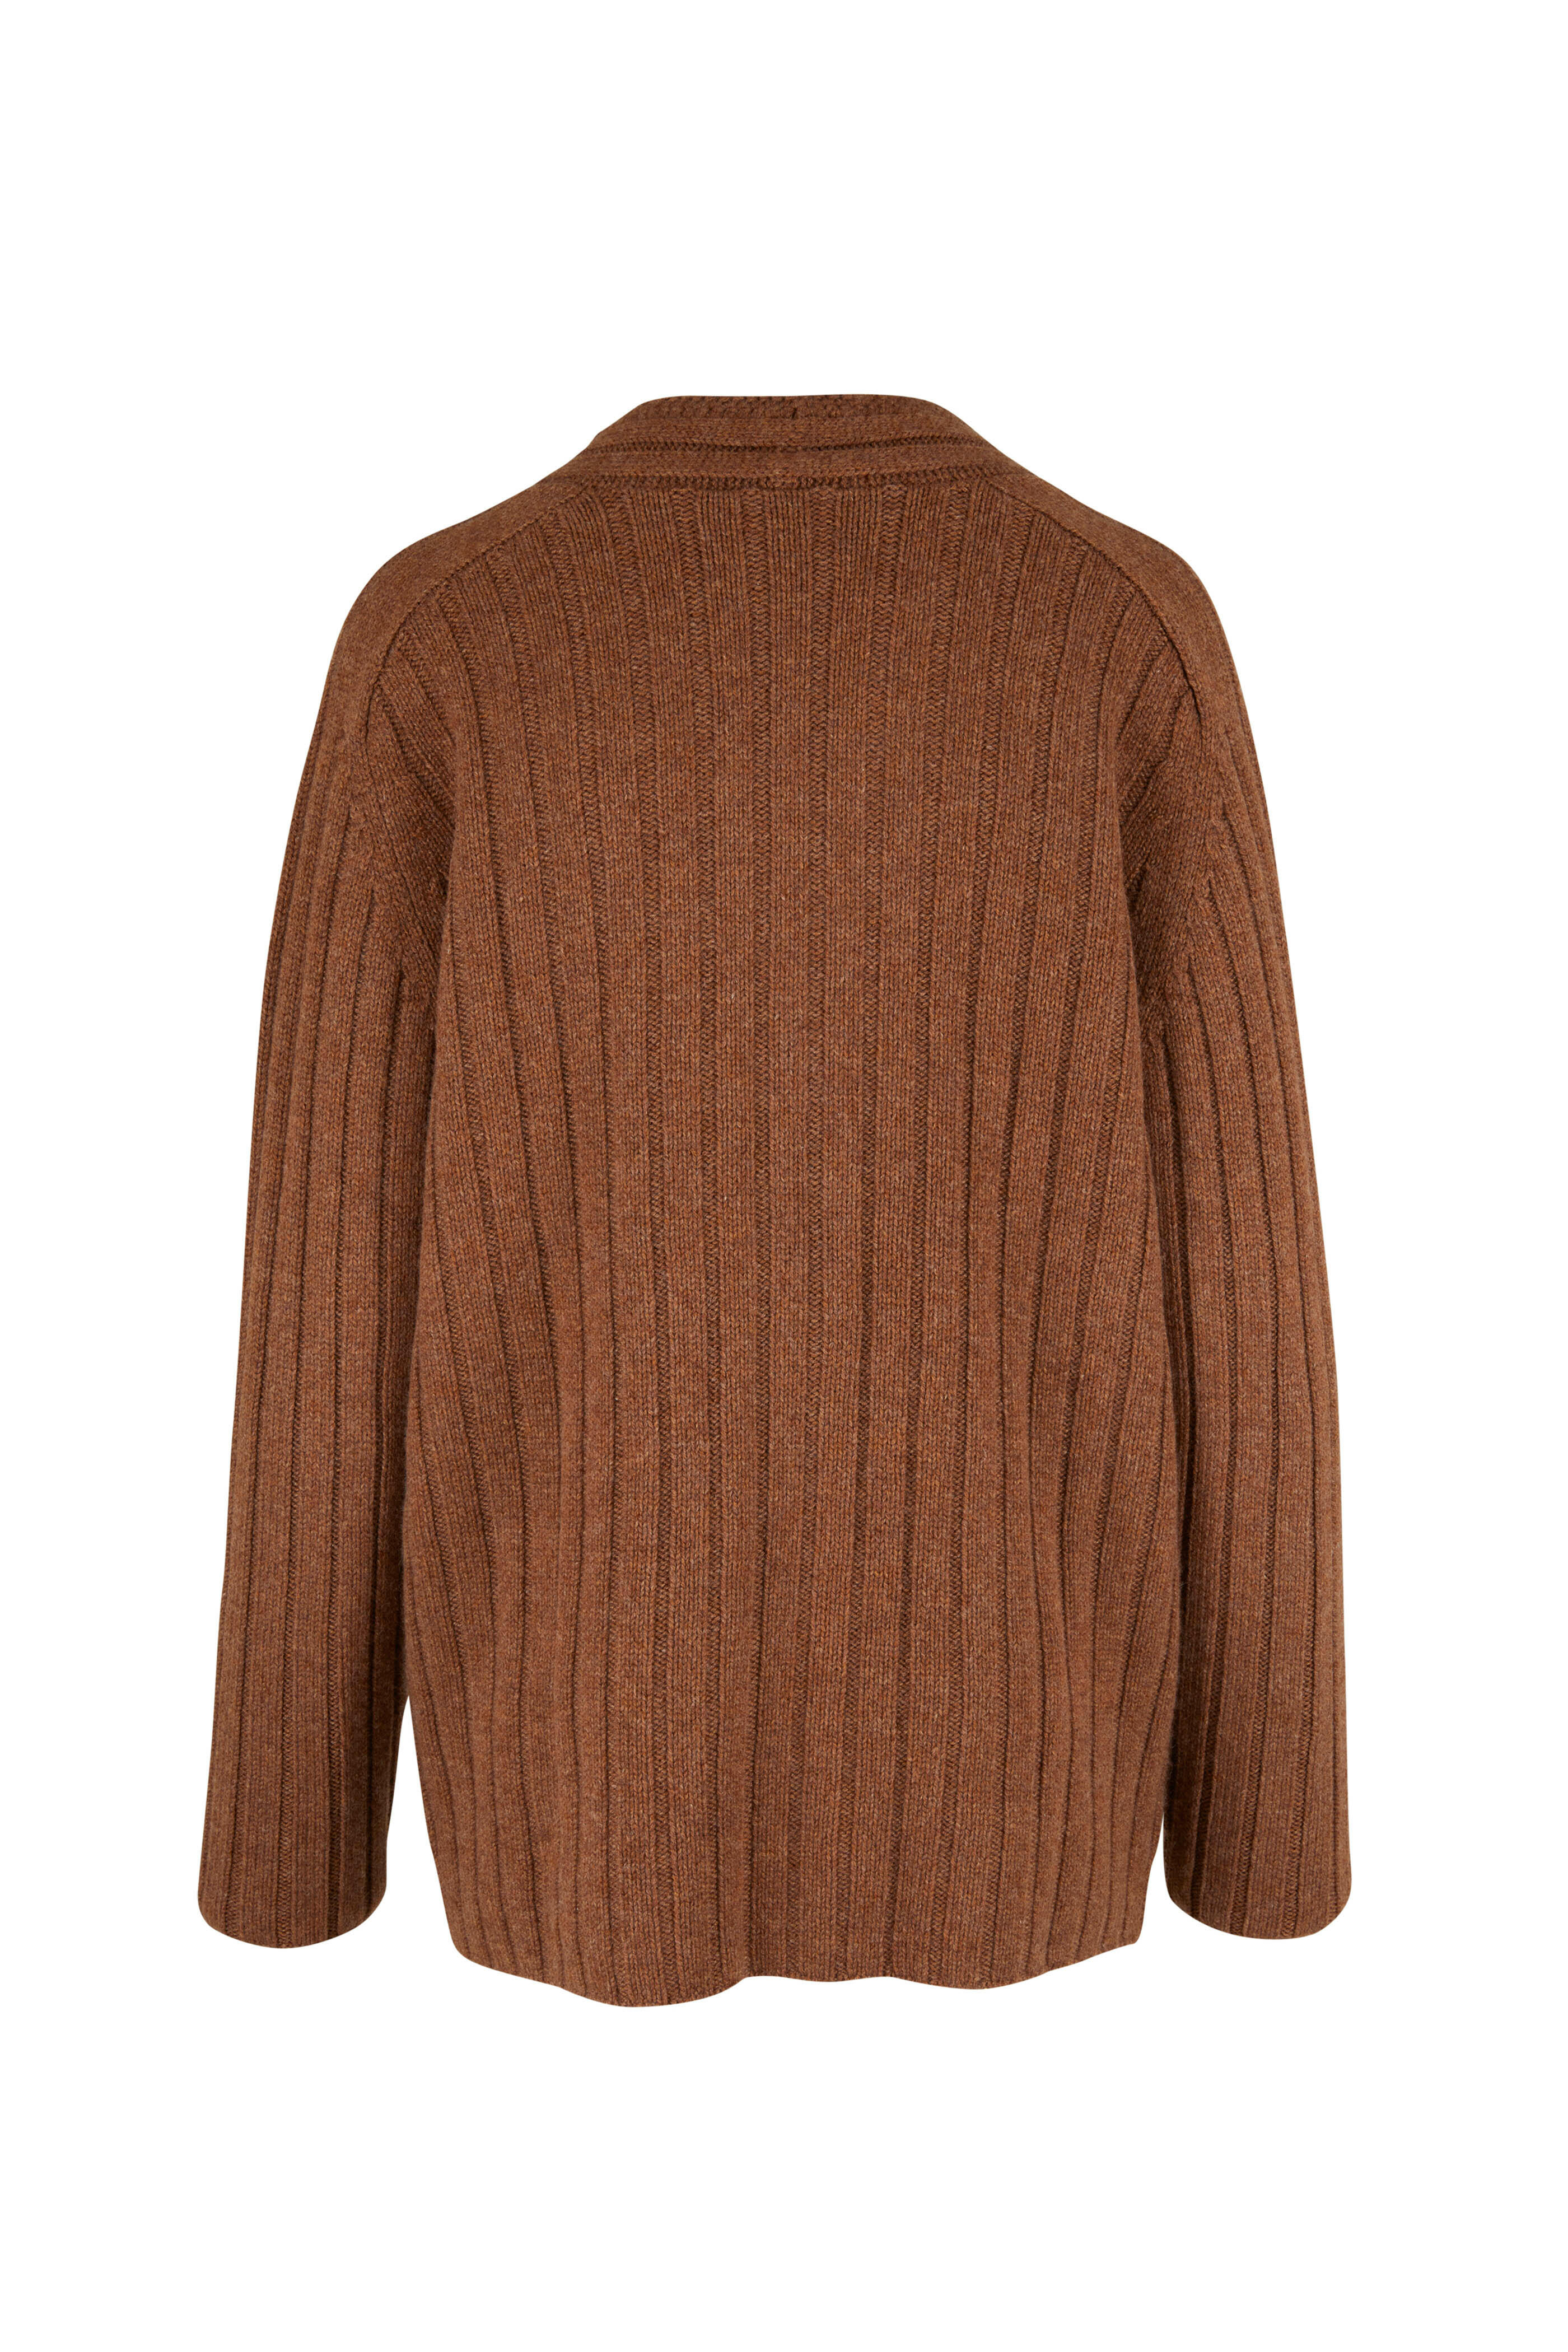 KHAITE The Amrita cashmere-blend cardigan - Brown